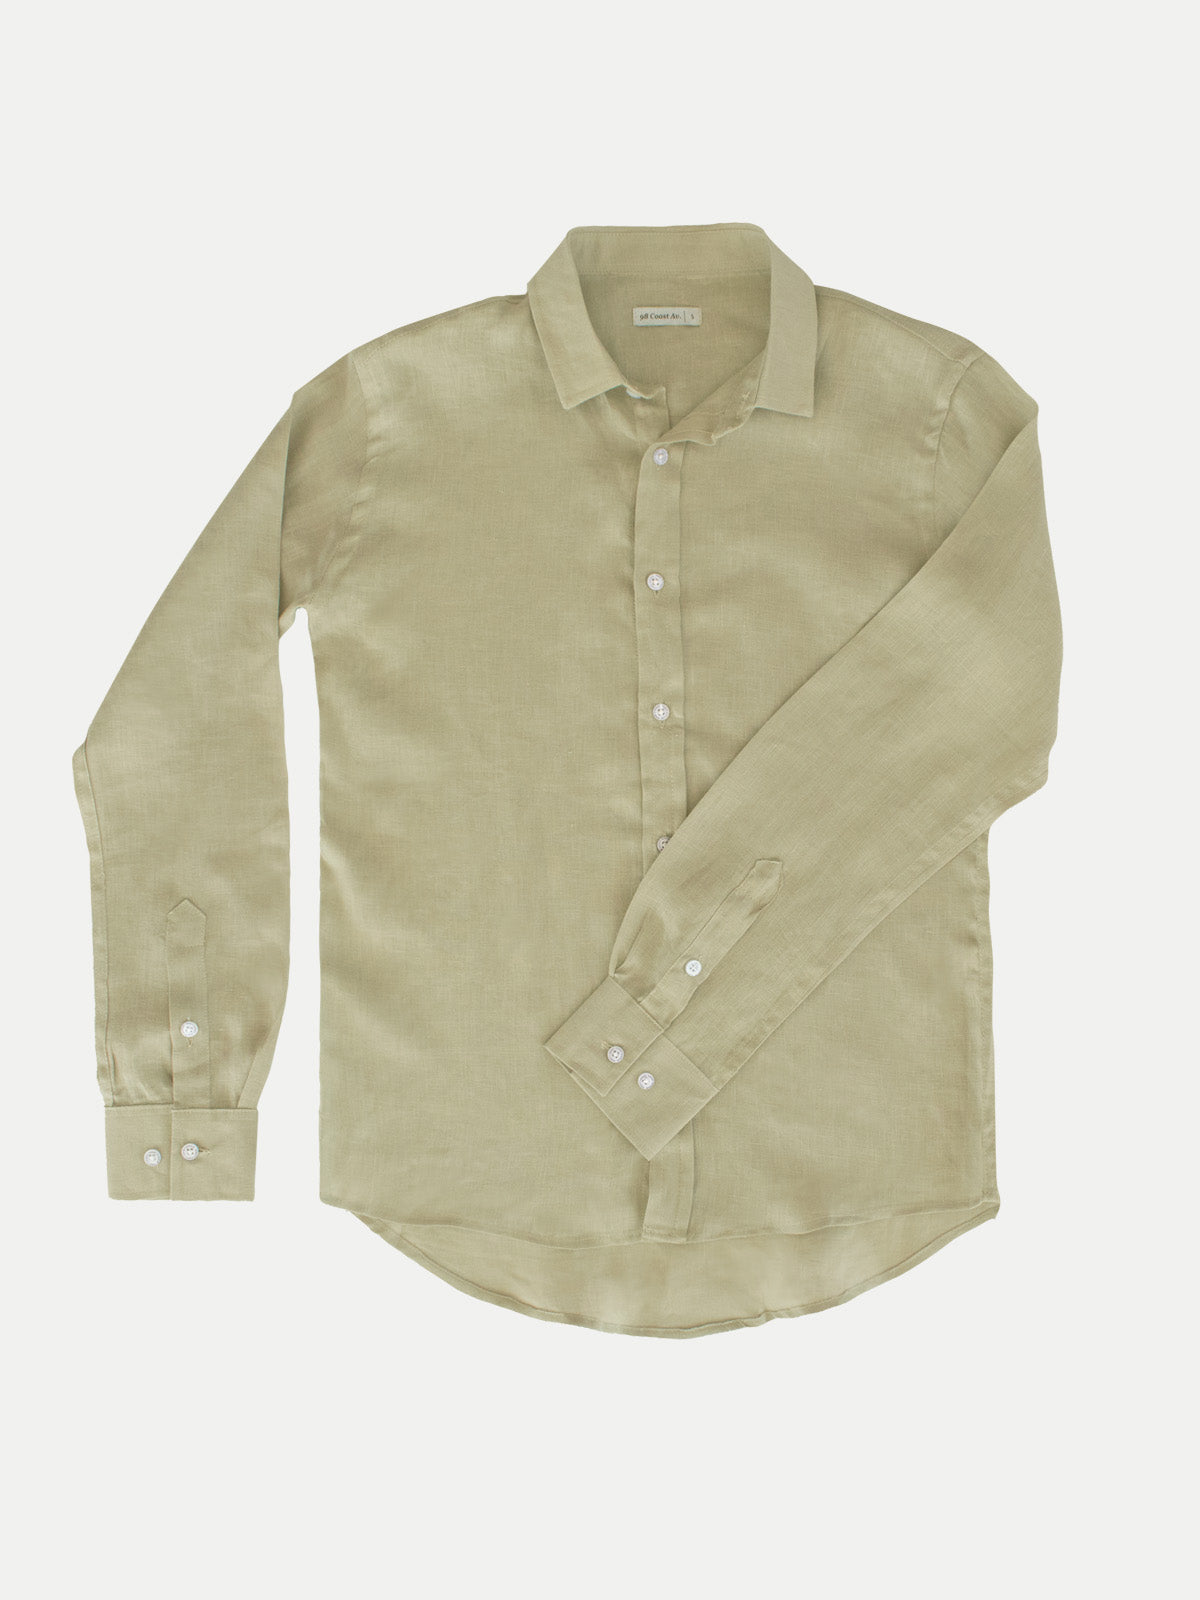 Beige 100% Linen Shirt by 98 Coast Av.